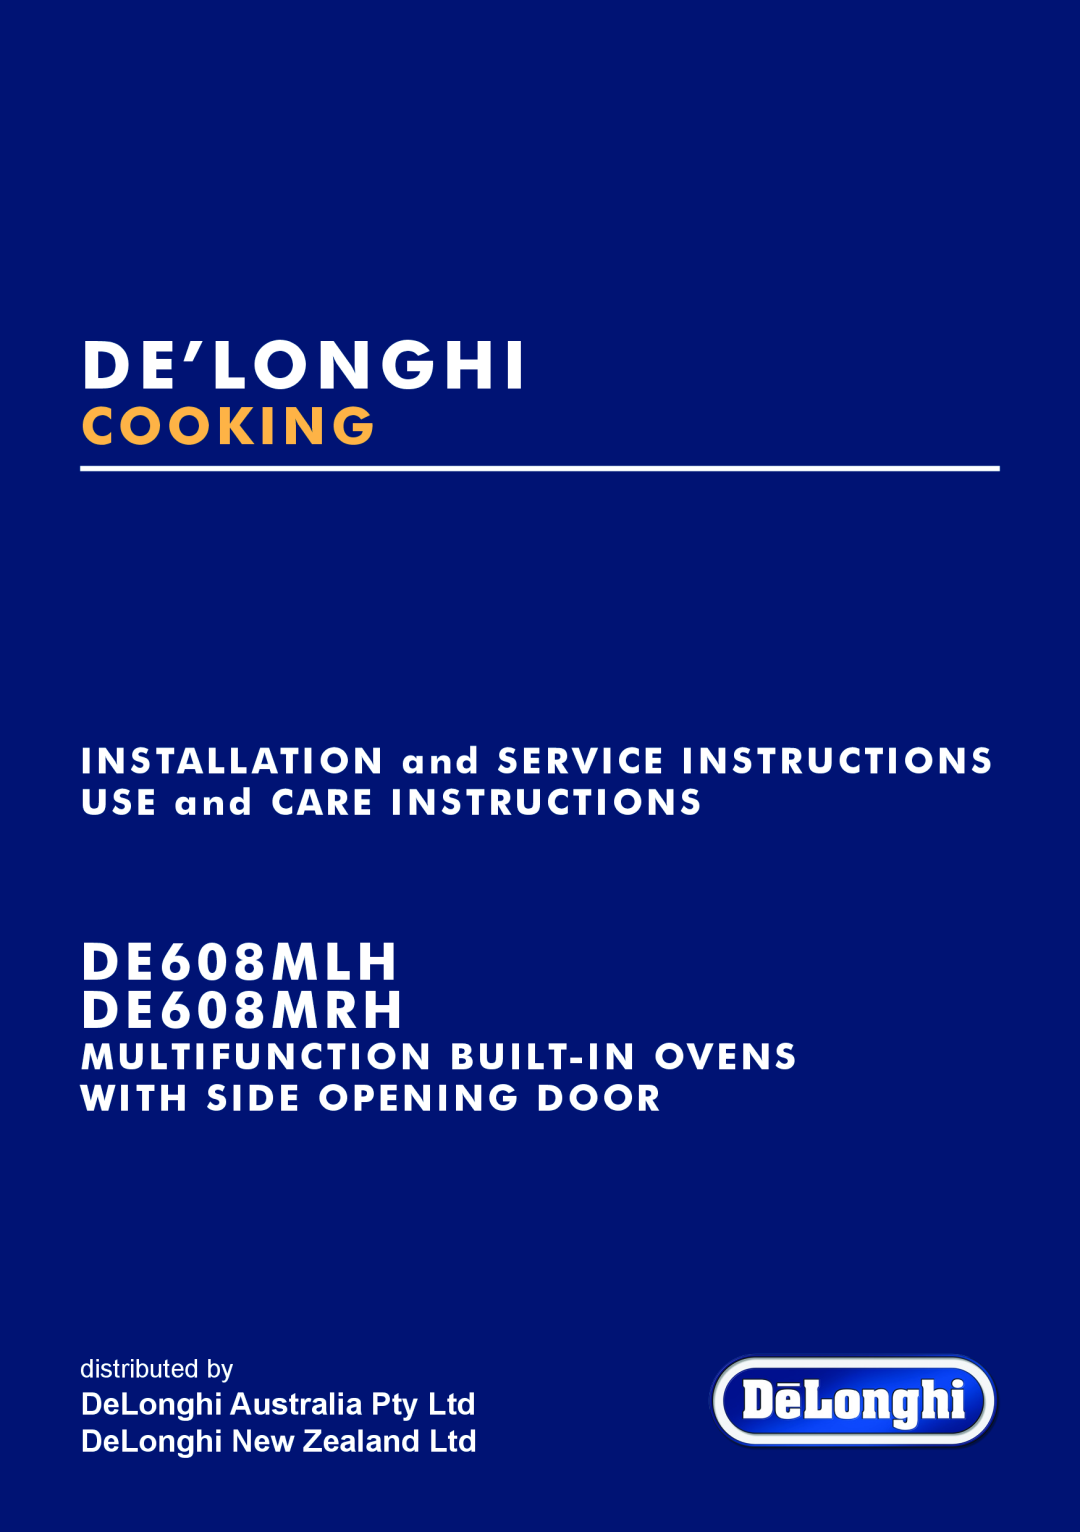 DeLonghi manual De’Longhi, Cooking, DE608MLH DE608MRH, INSTALLATION and SERVICE INSTRUCTIONS USE and CARE INSTRUCTIONS 